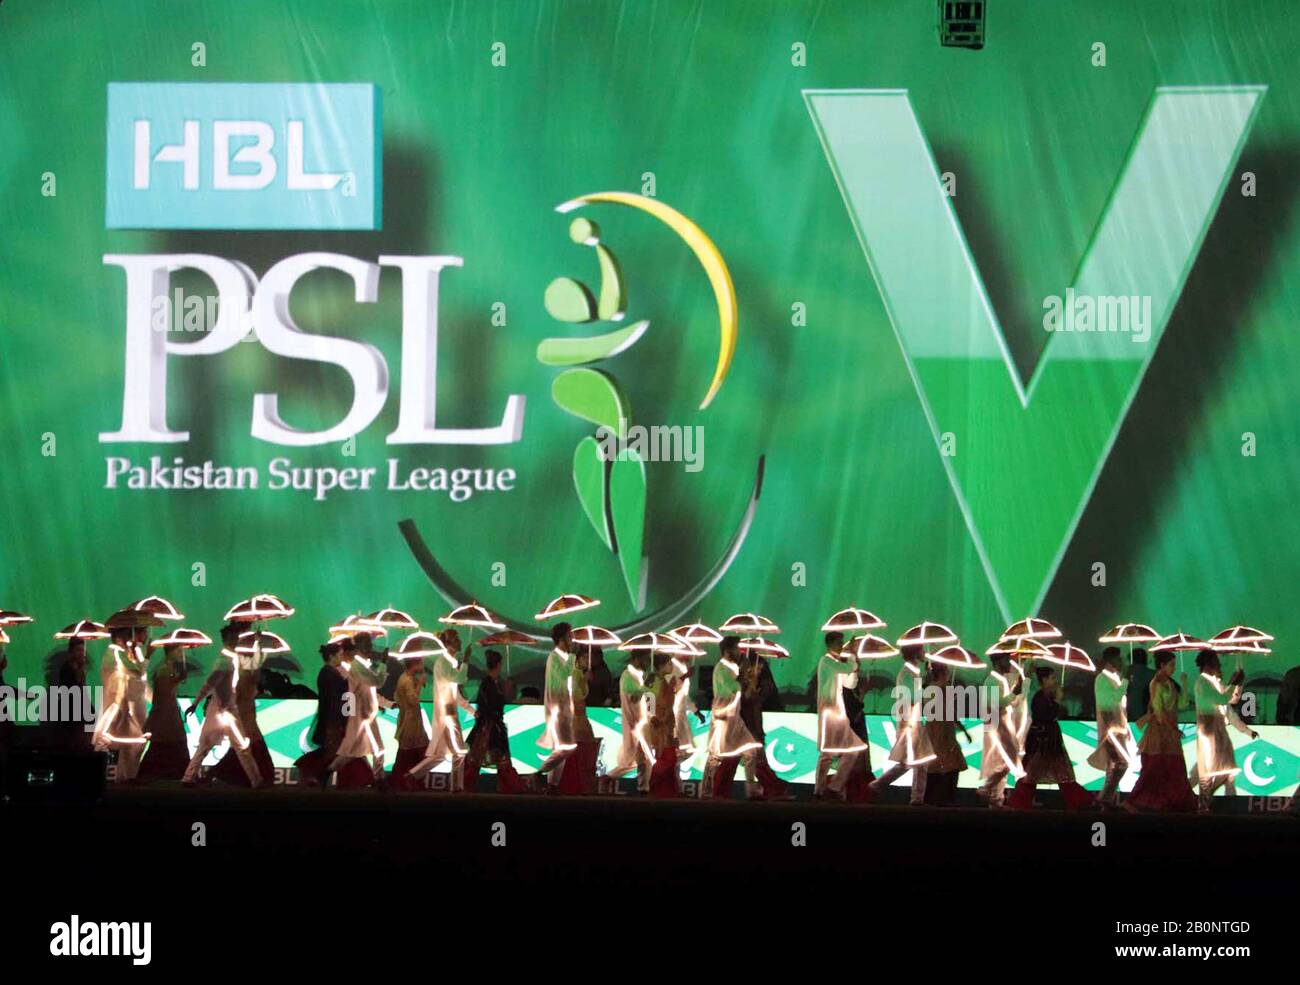 Pakistan super league hi-res stock photography and images